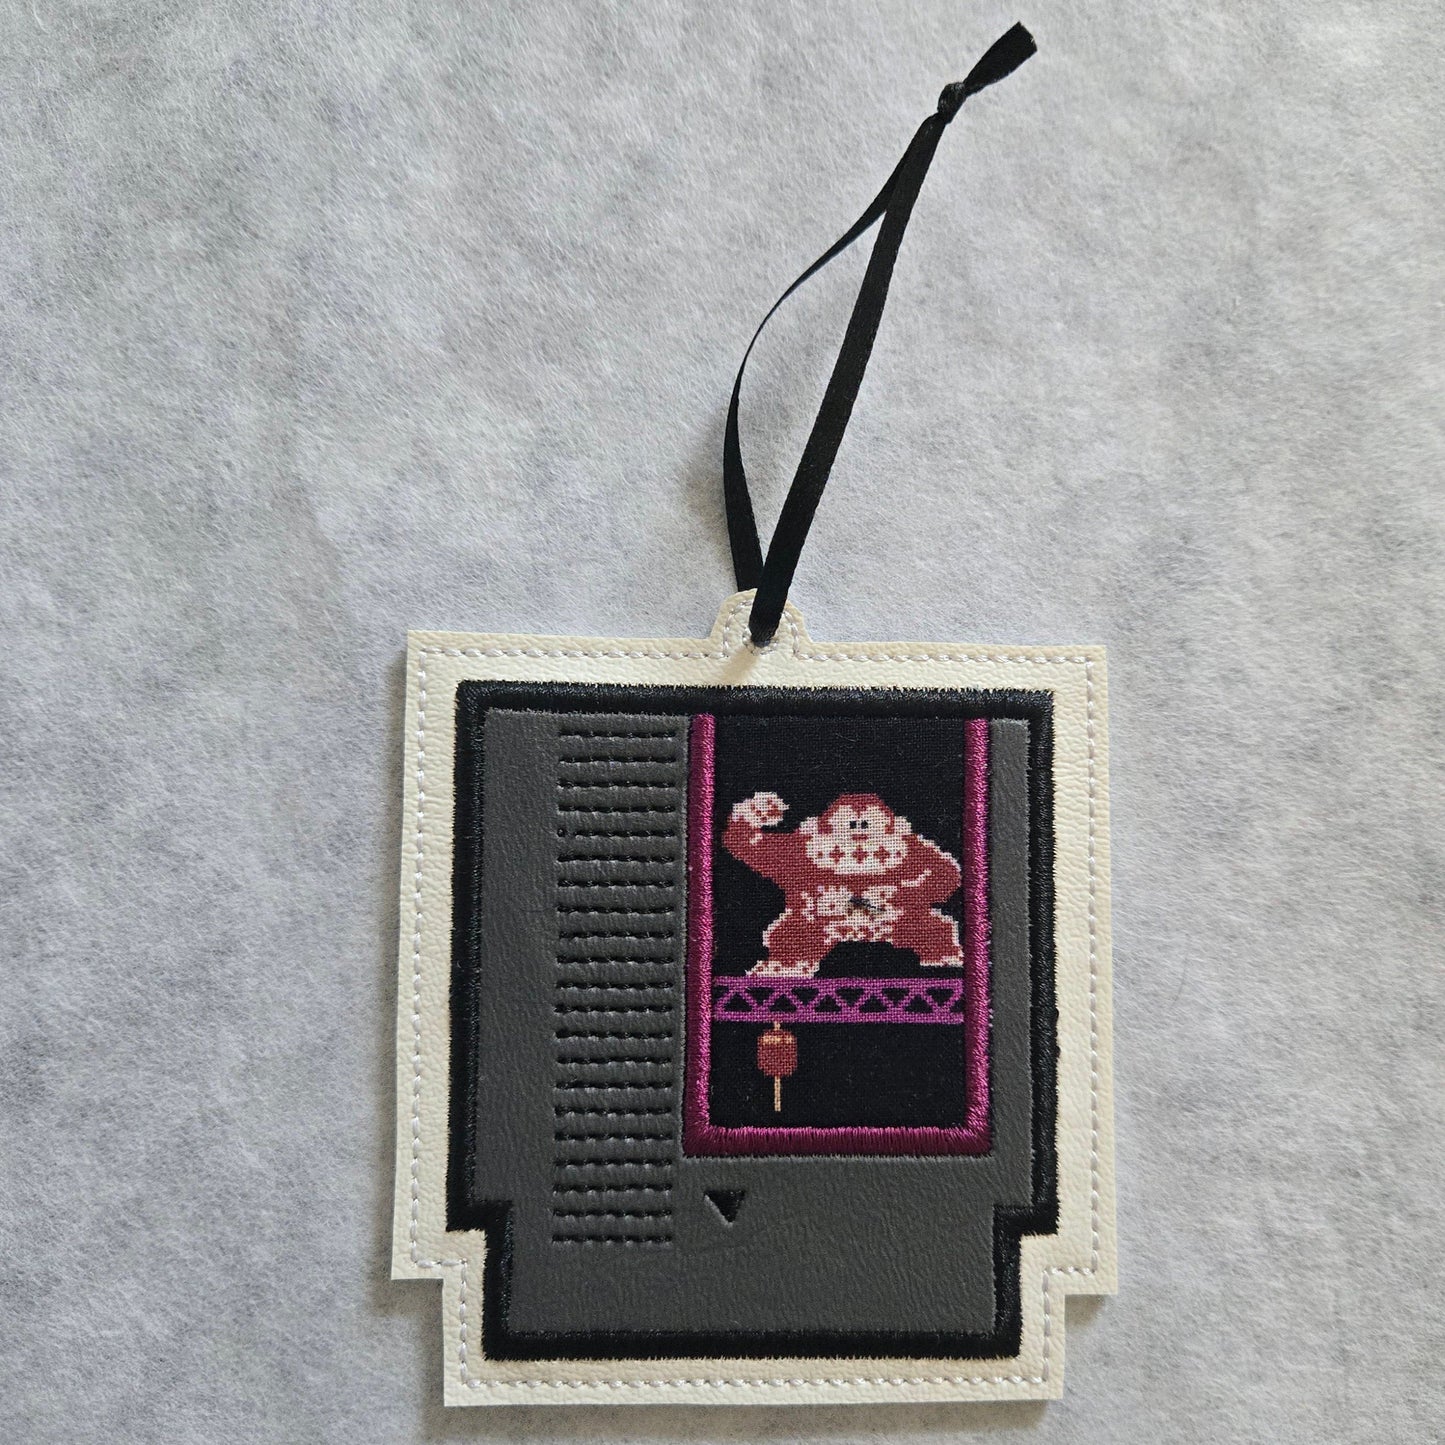 Retro Game Cartridge Ornament